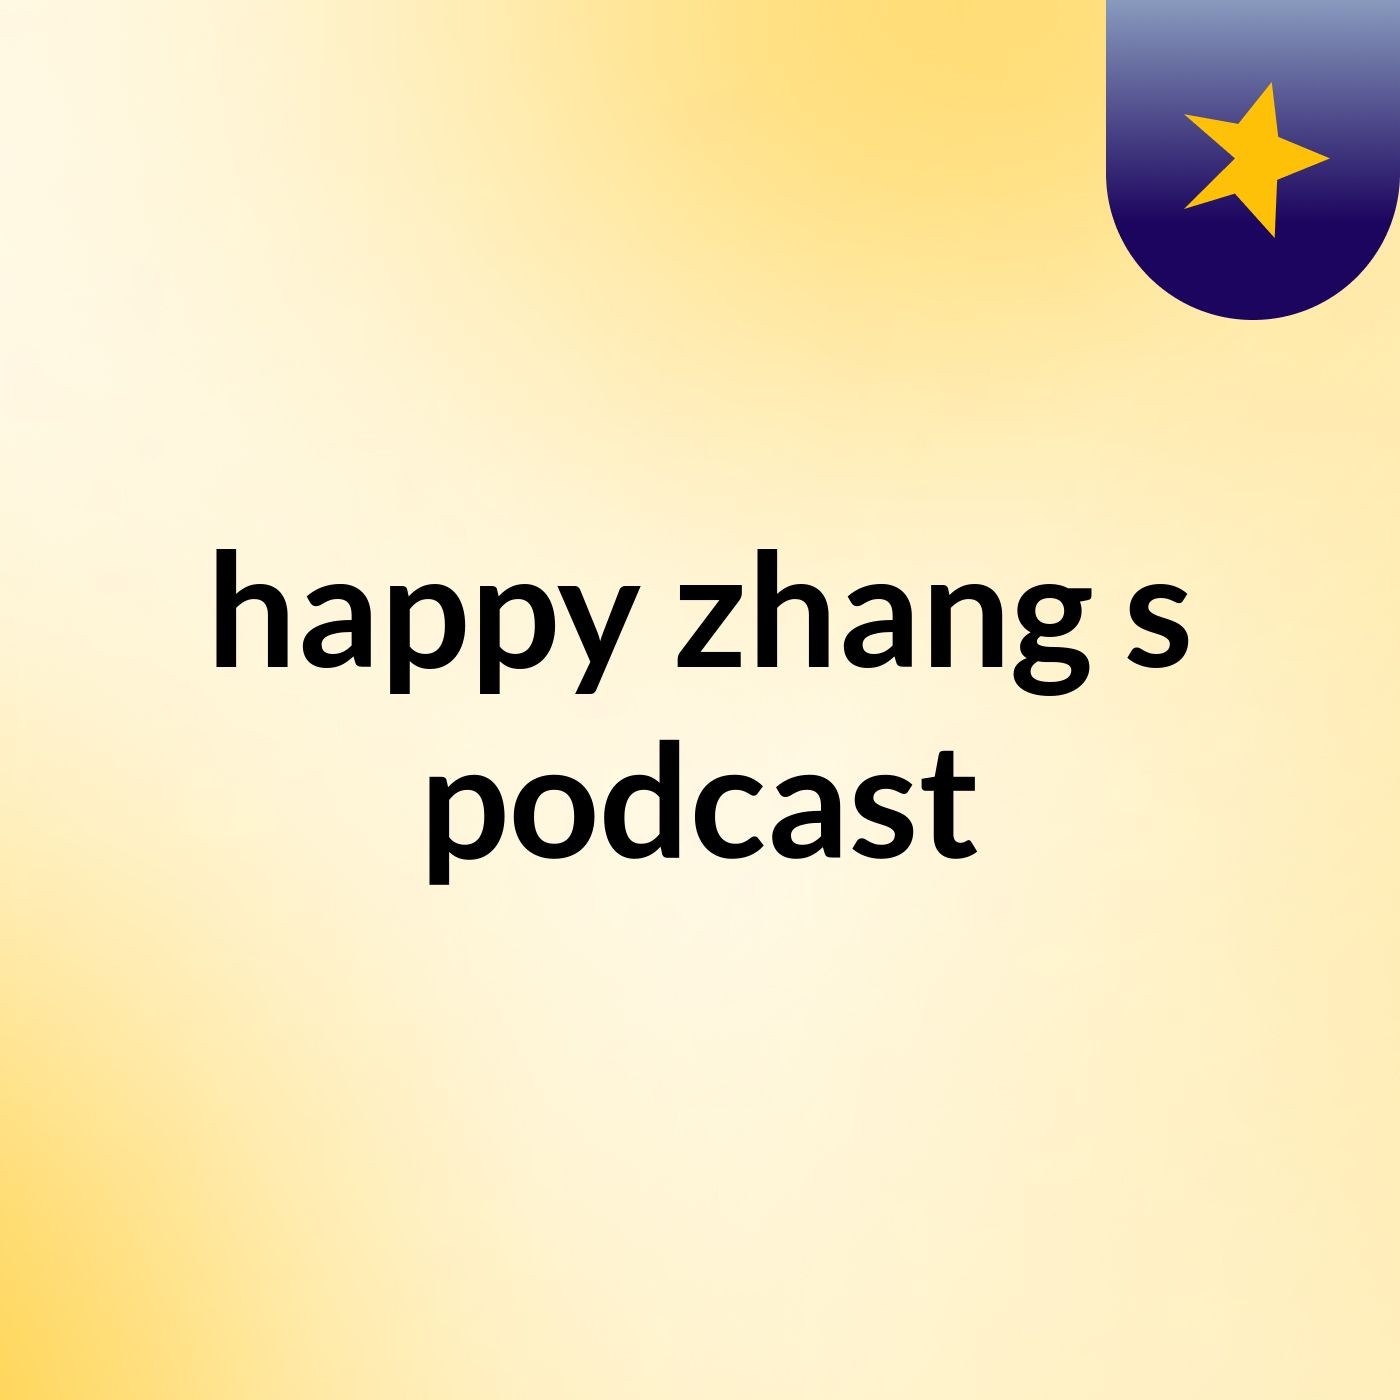 happy zhang's podcast